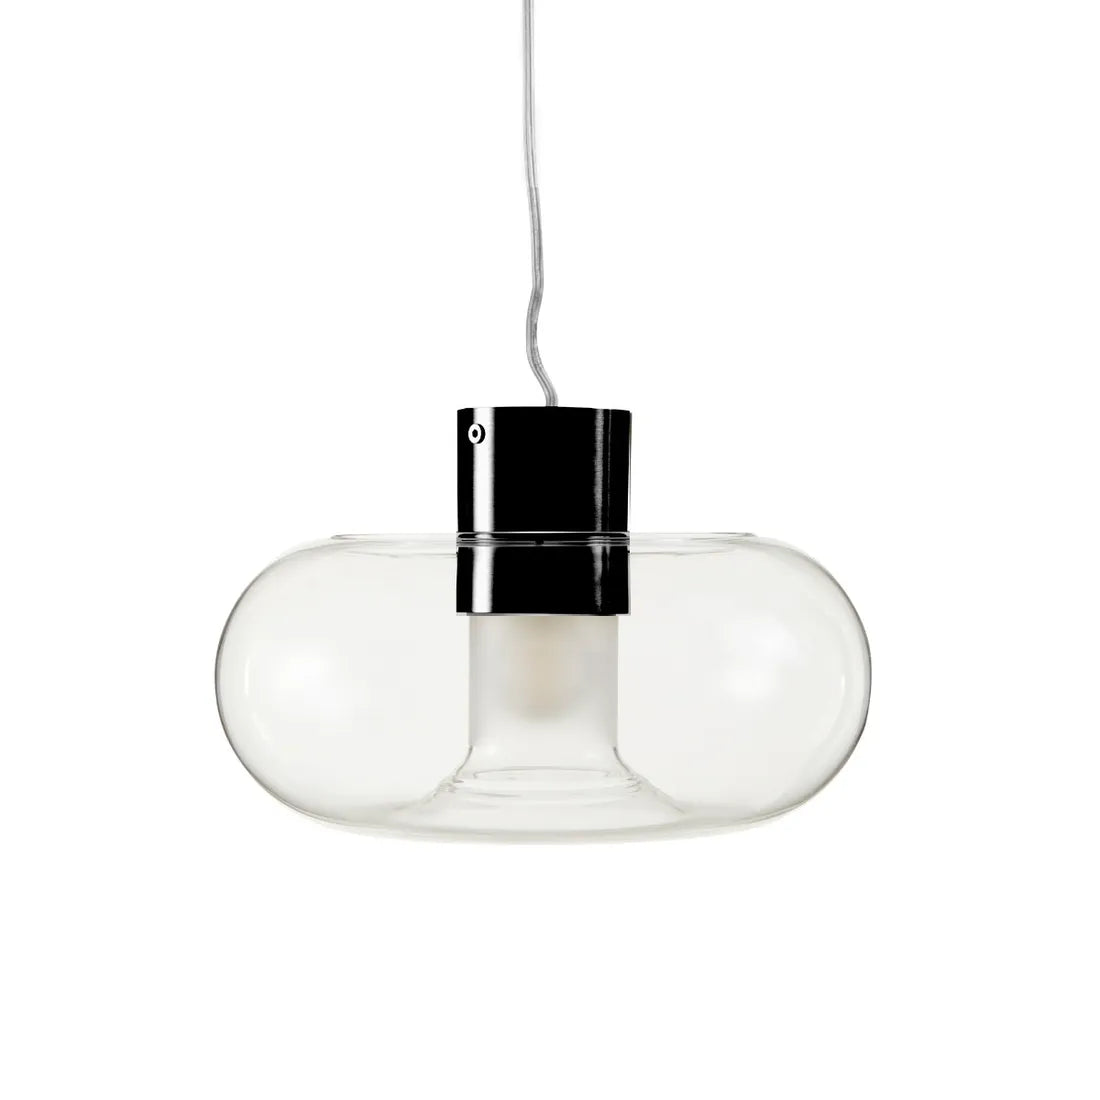 Glass pendant lamps, ball lights, industrial lights & lamps, office pendant light, designer hanging lights